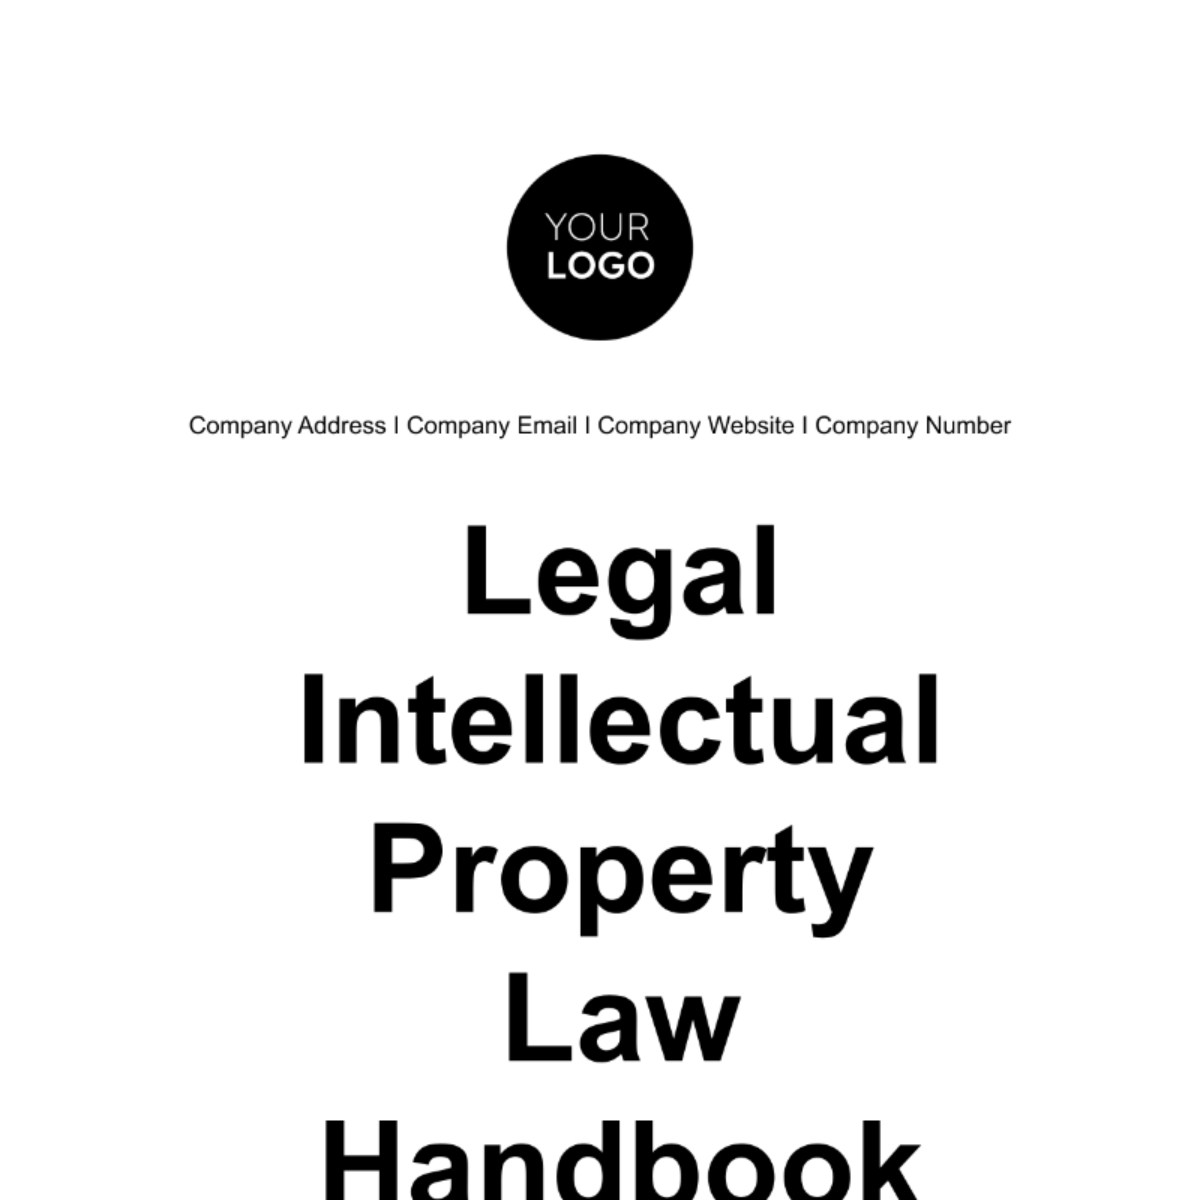 Free Legal Intellectual Property Law Handbook Template